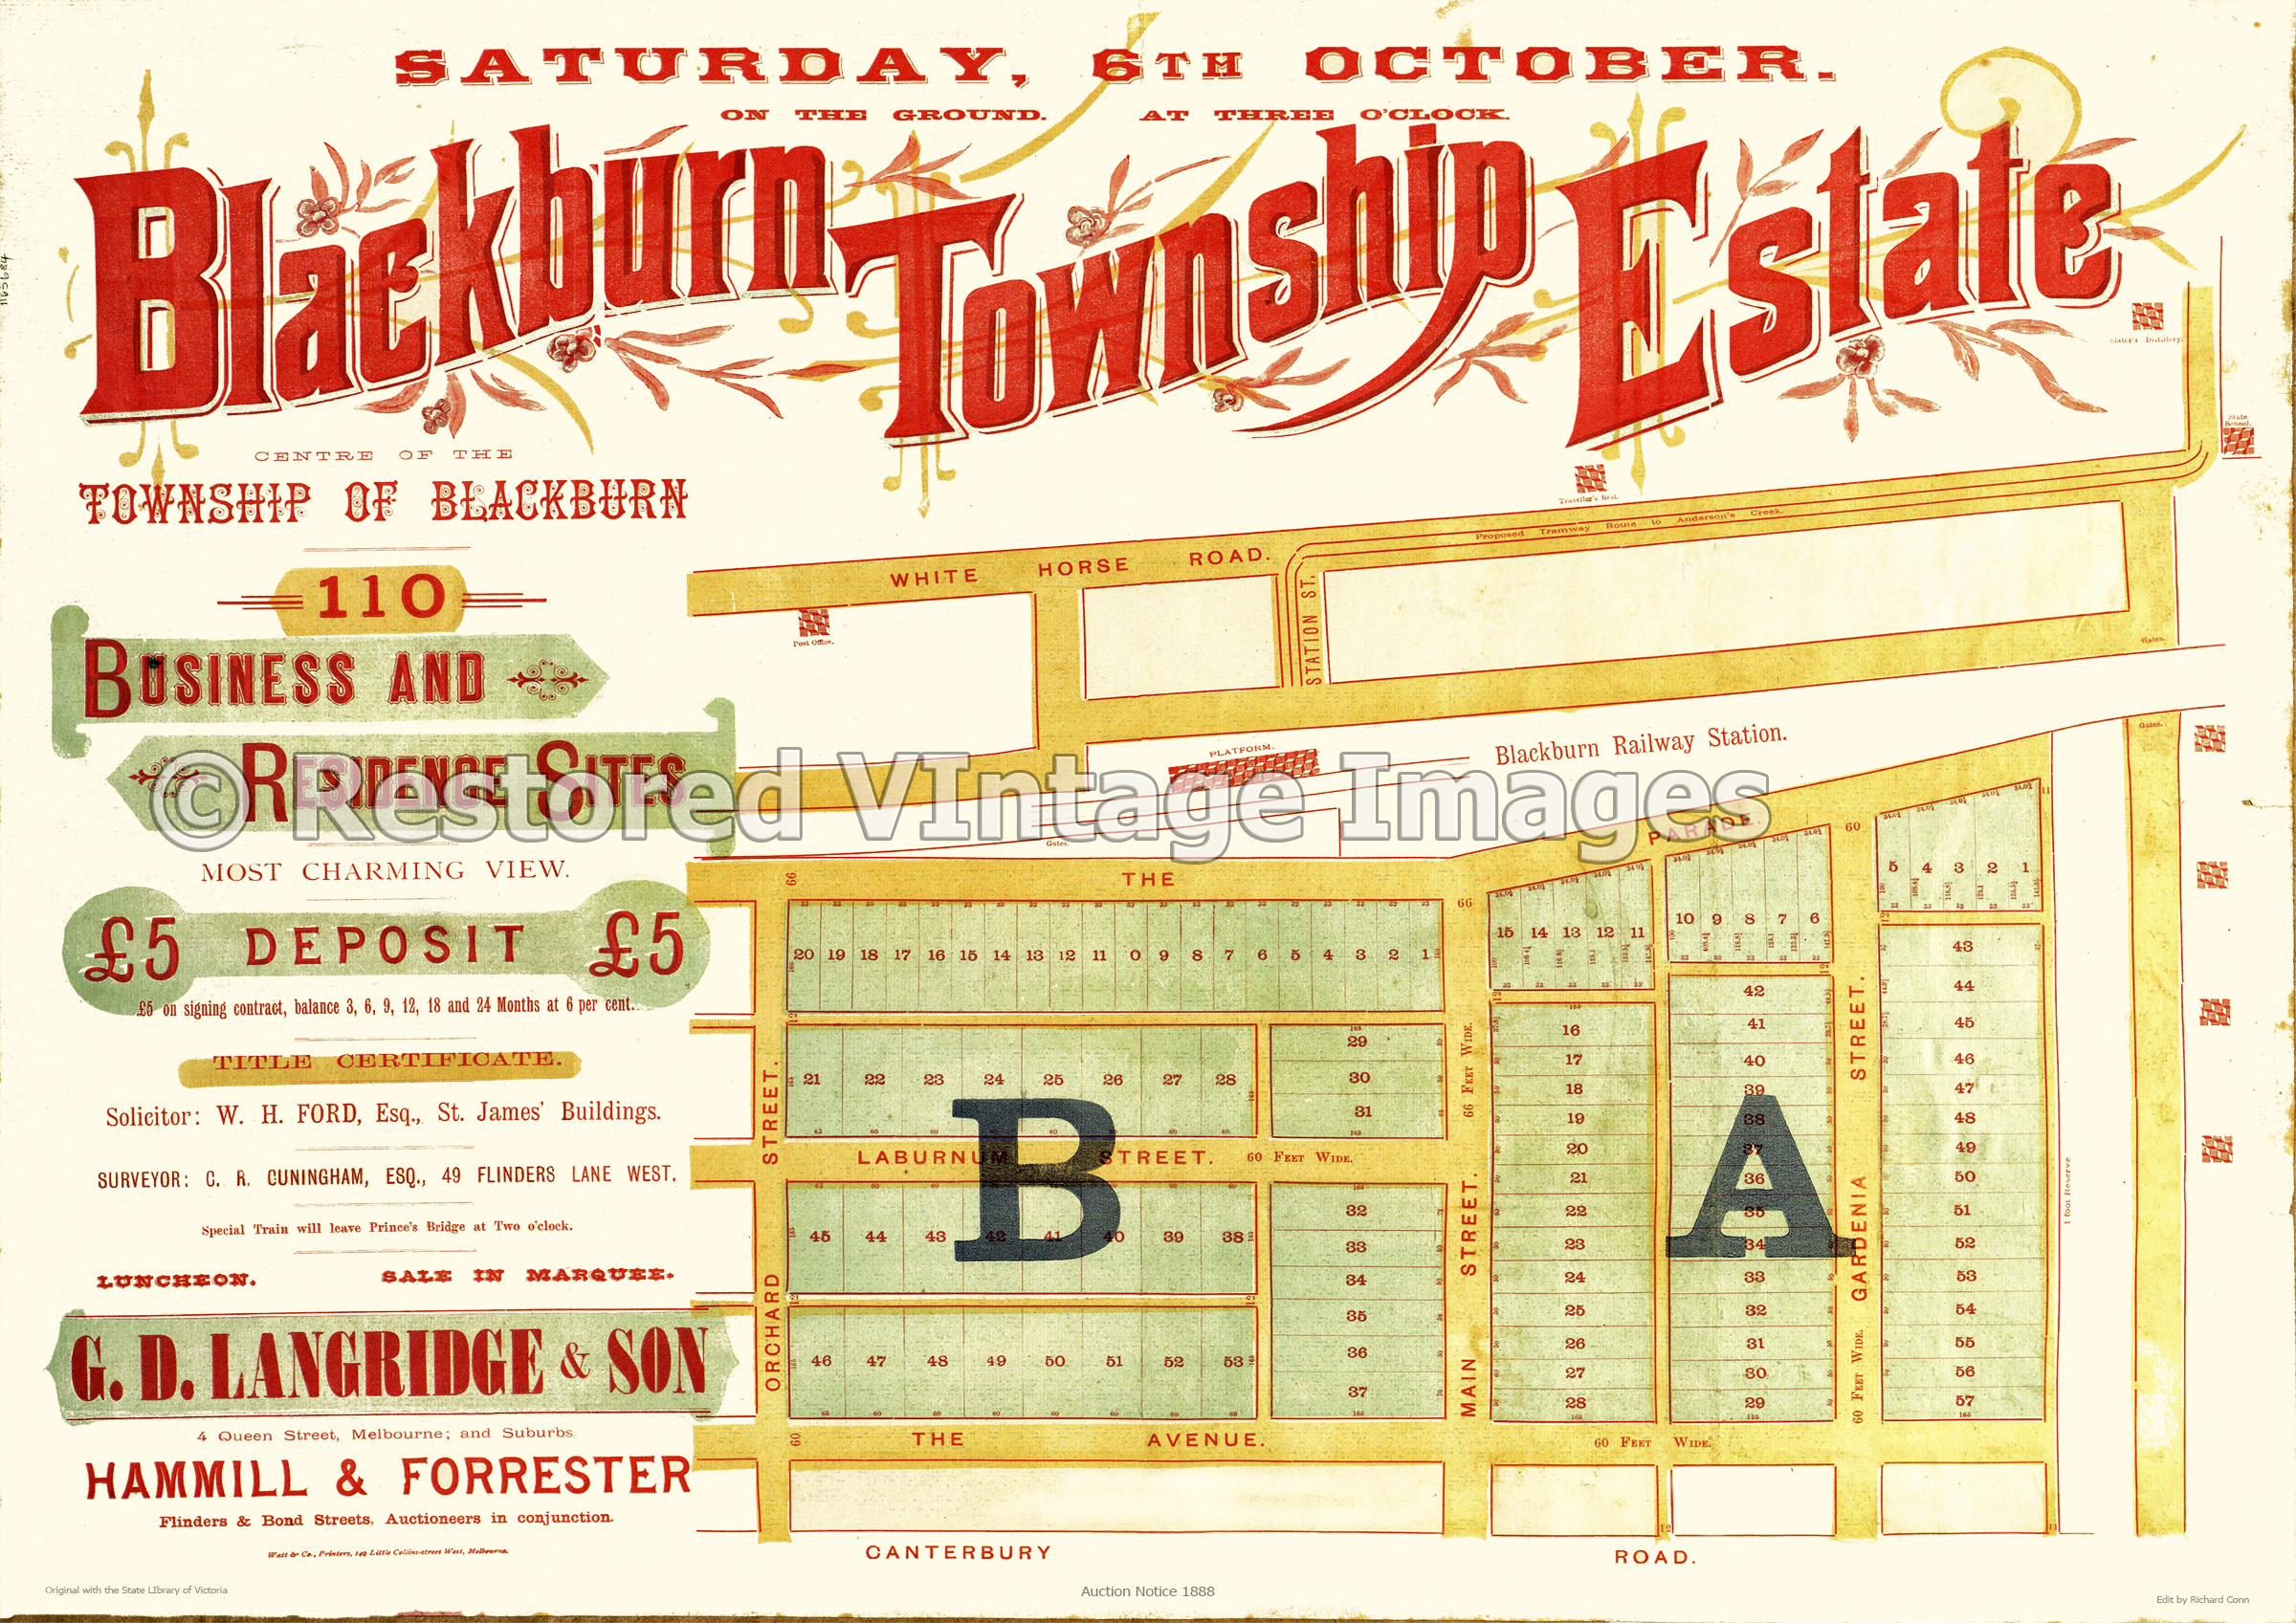 Blackburn Township Estate 6th October 1888 – Blackburn